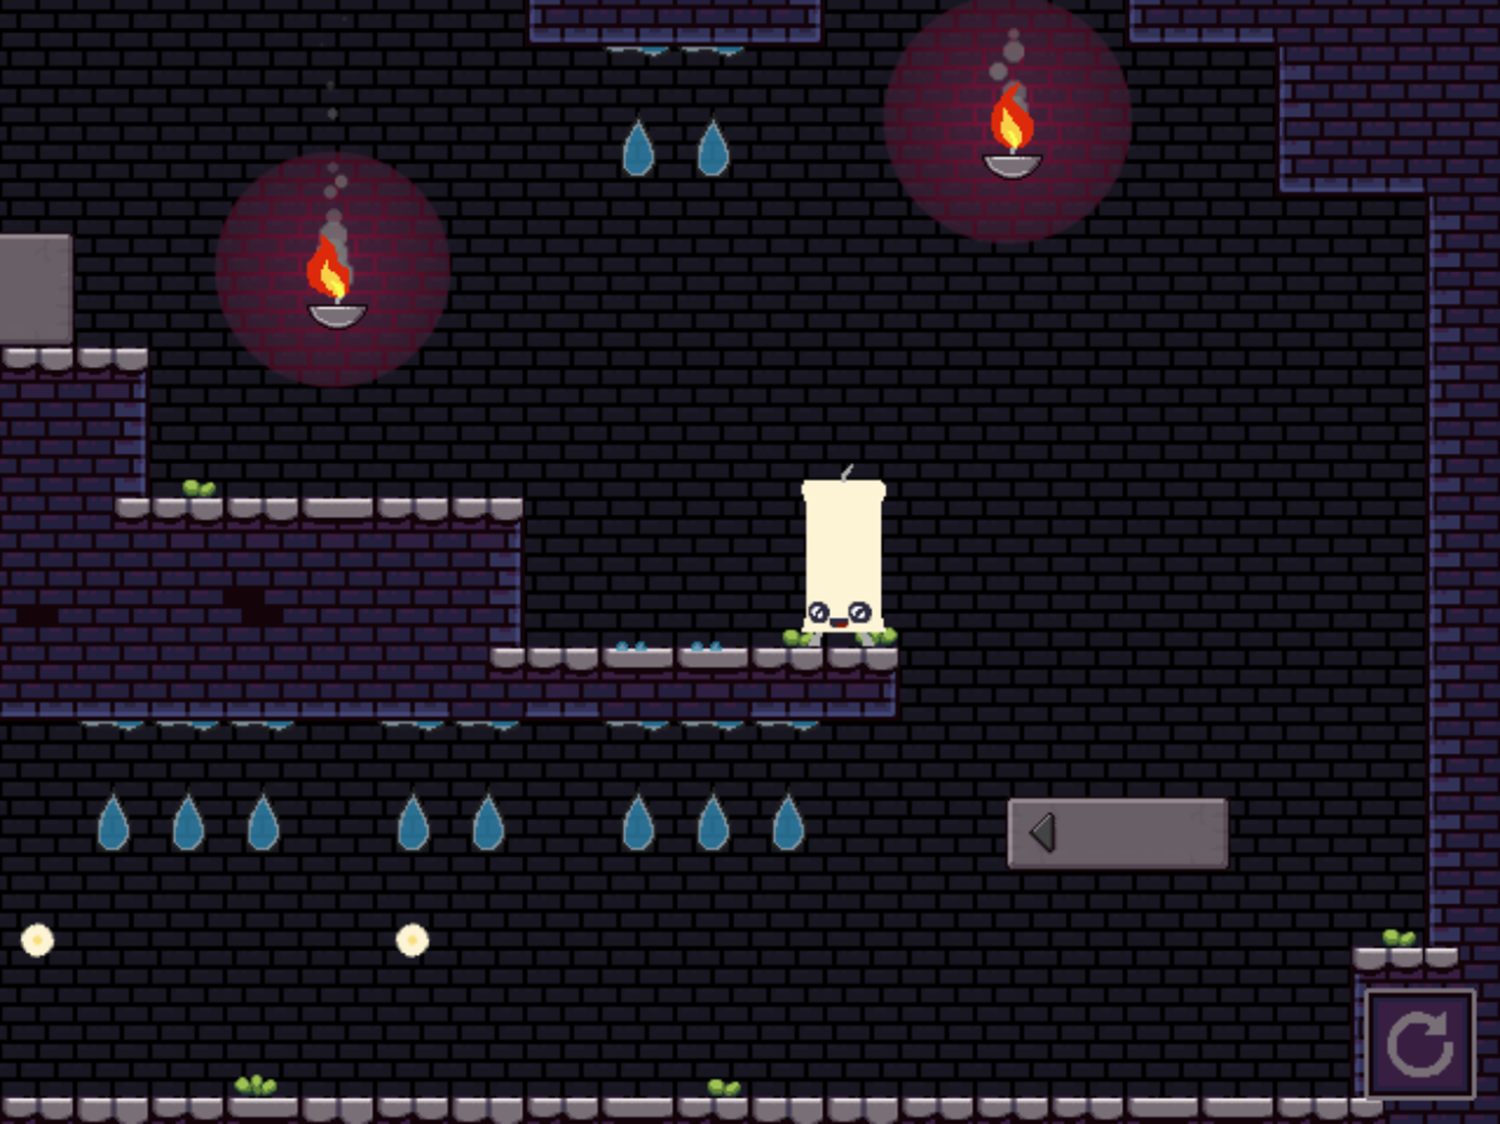 Lifespan Candle Game Final Level Screenshot.